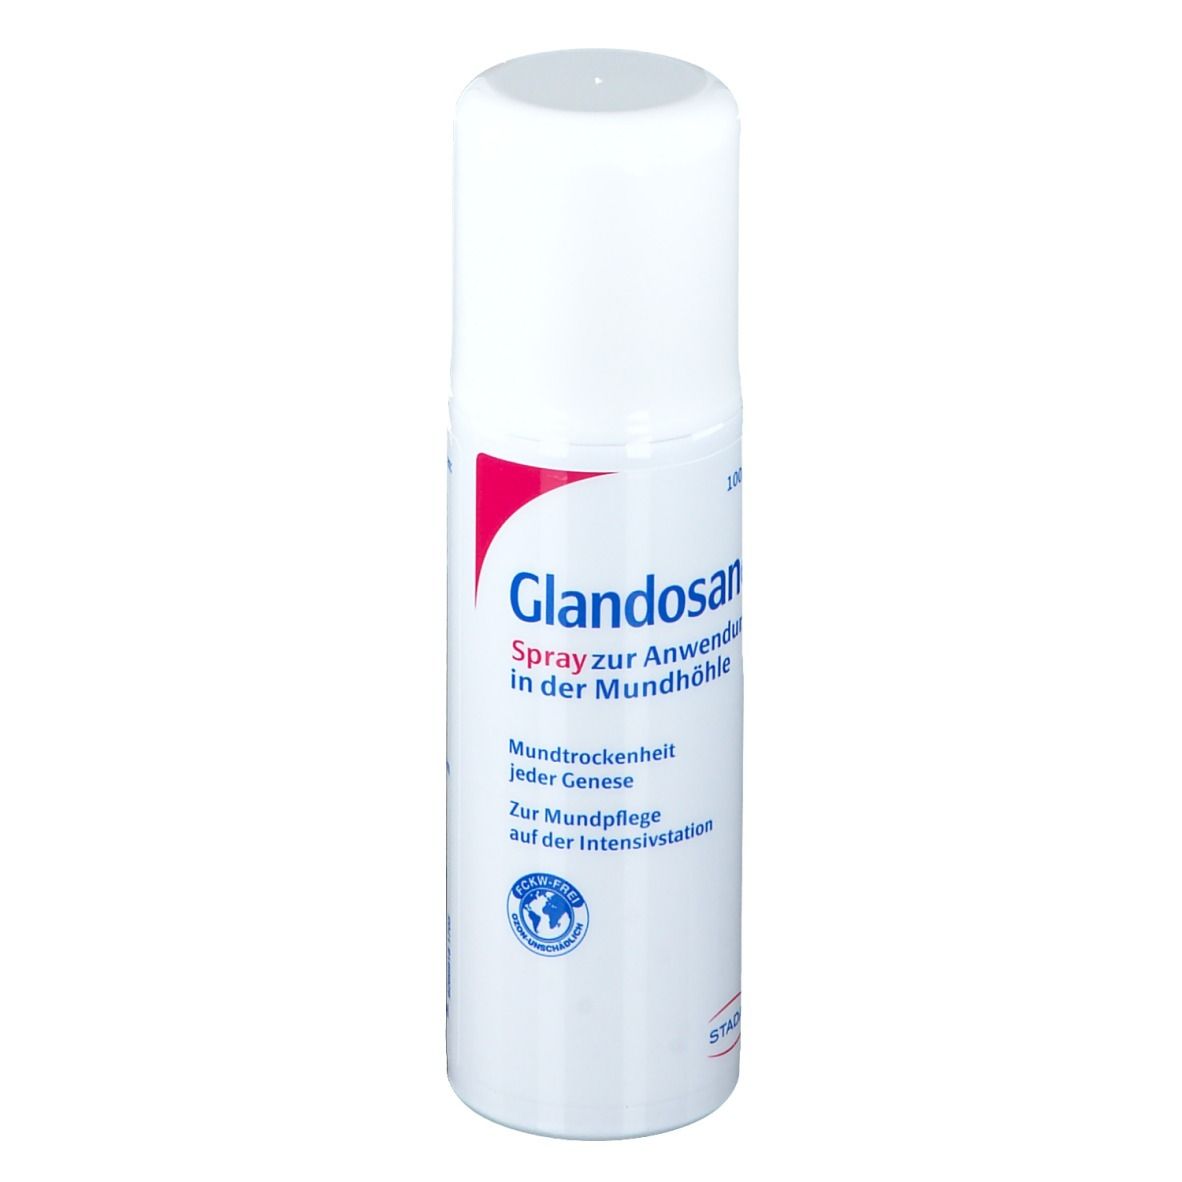 Glandosane® neutral Spraydose